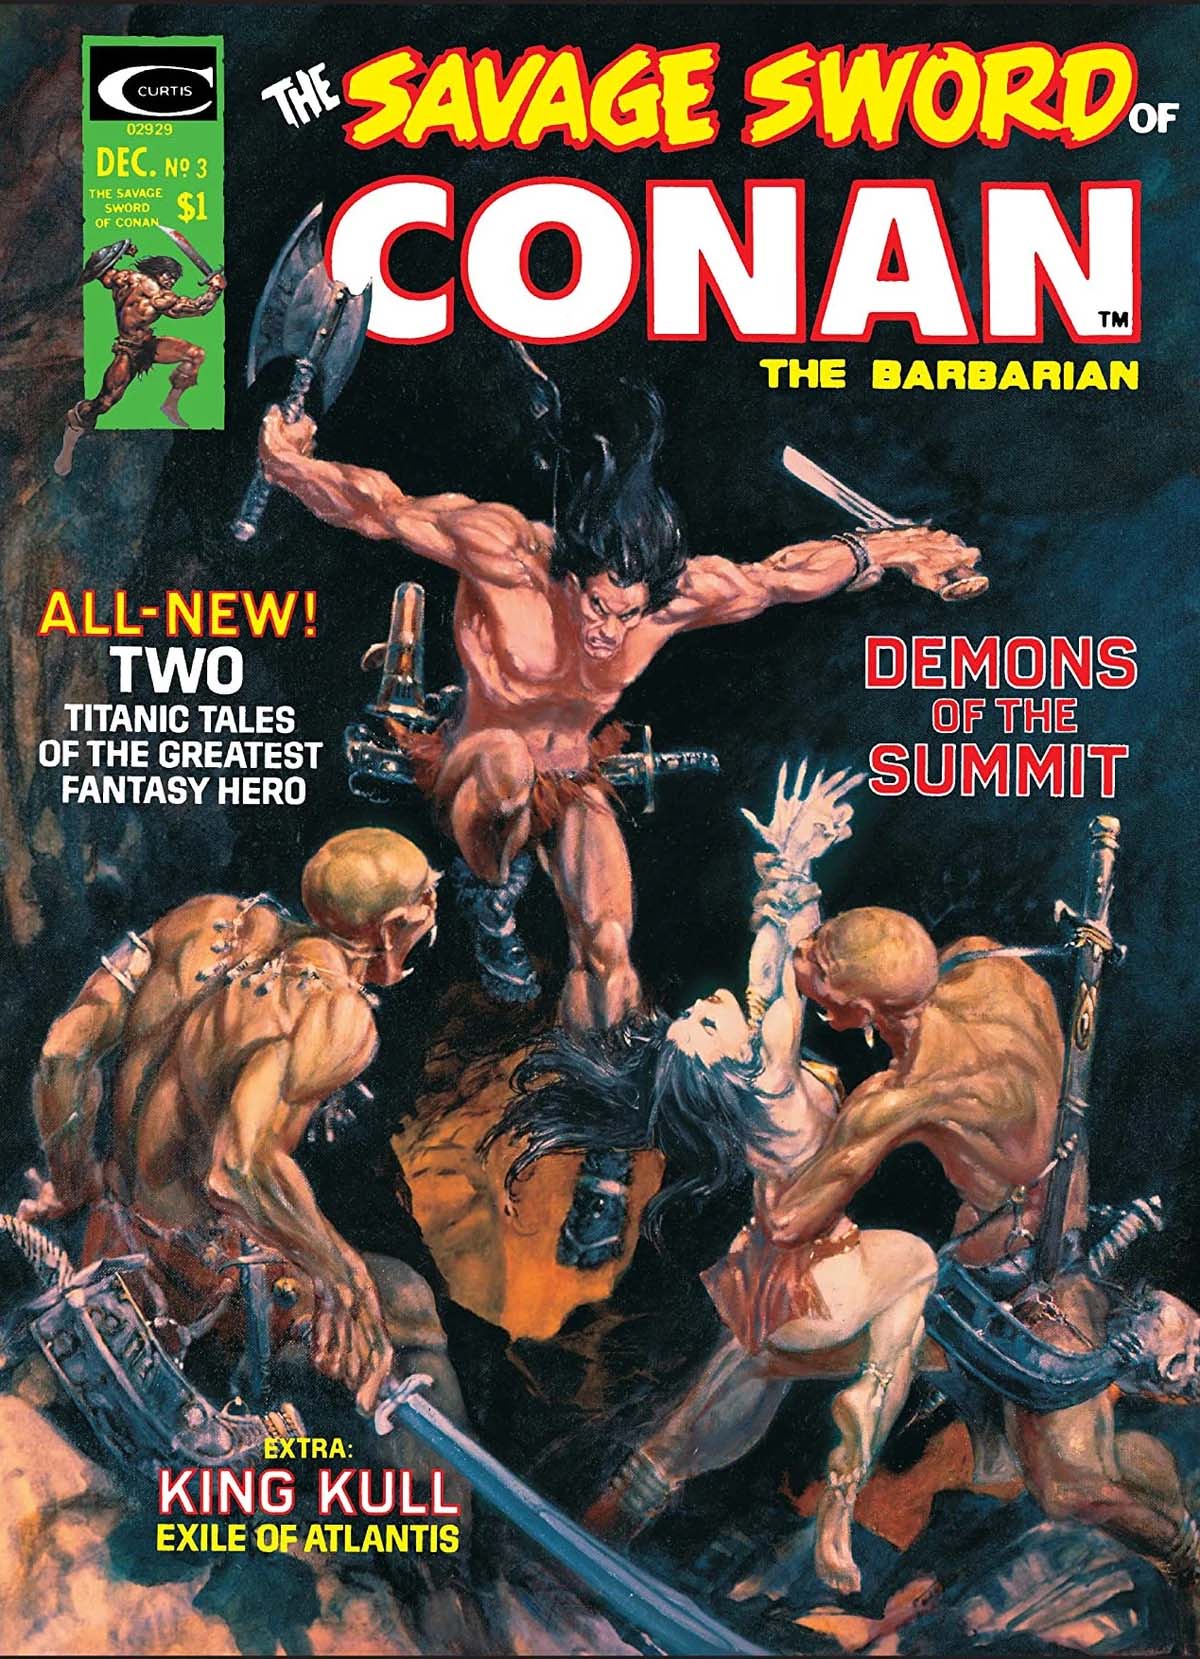 The Savage Sword of Conan #3, cover, art by Michael J. Kaluta